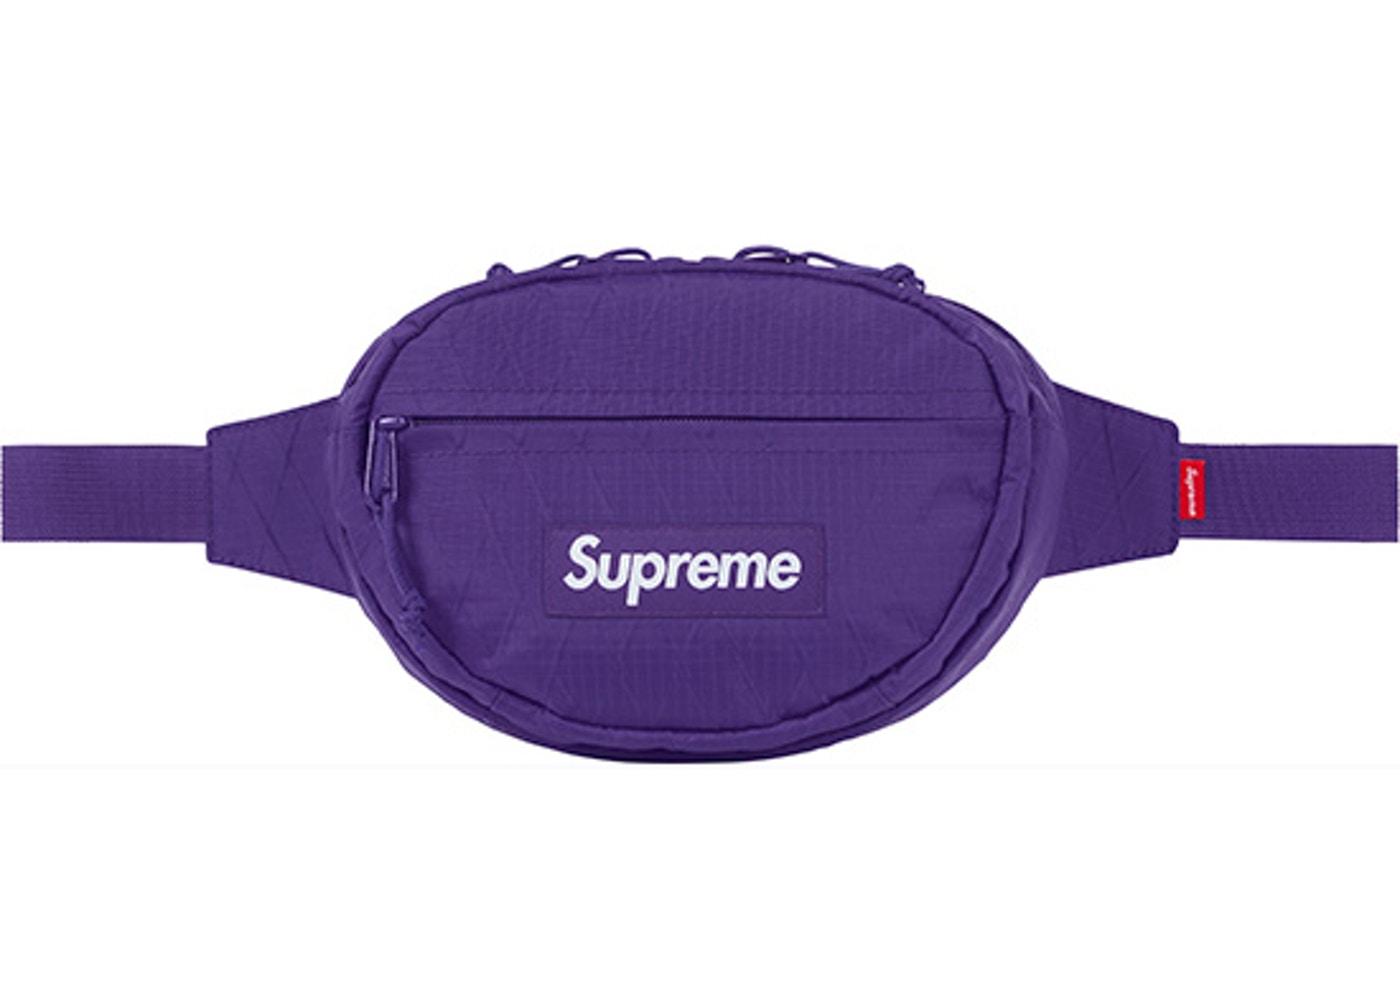 Supreme Backpack (FW18) Purple - StockX News